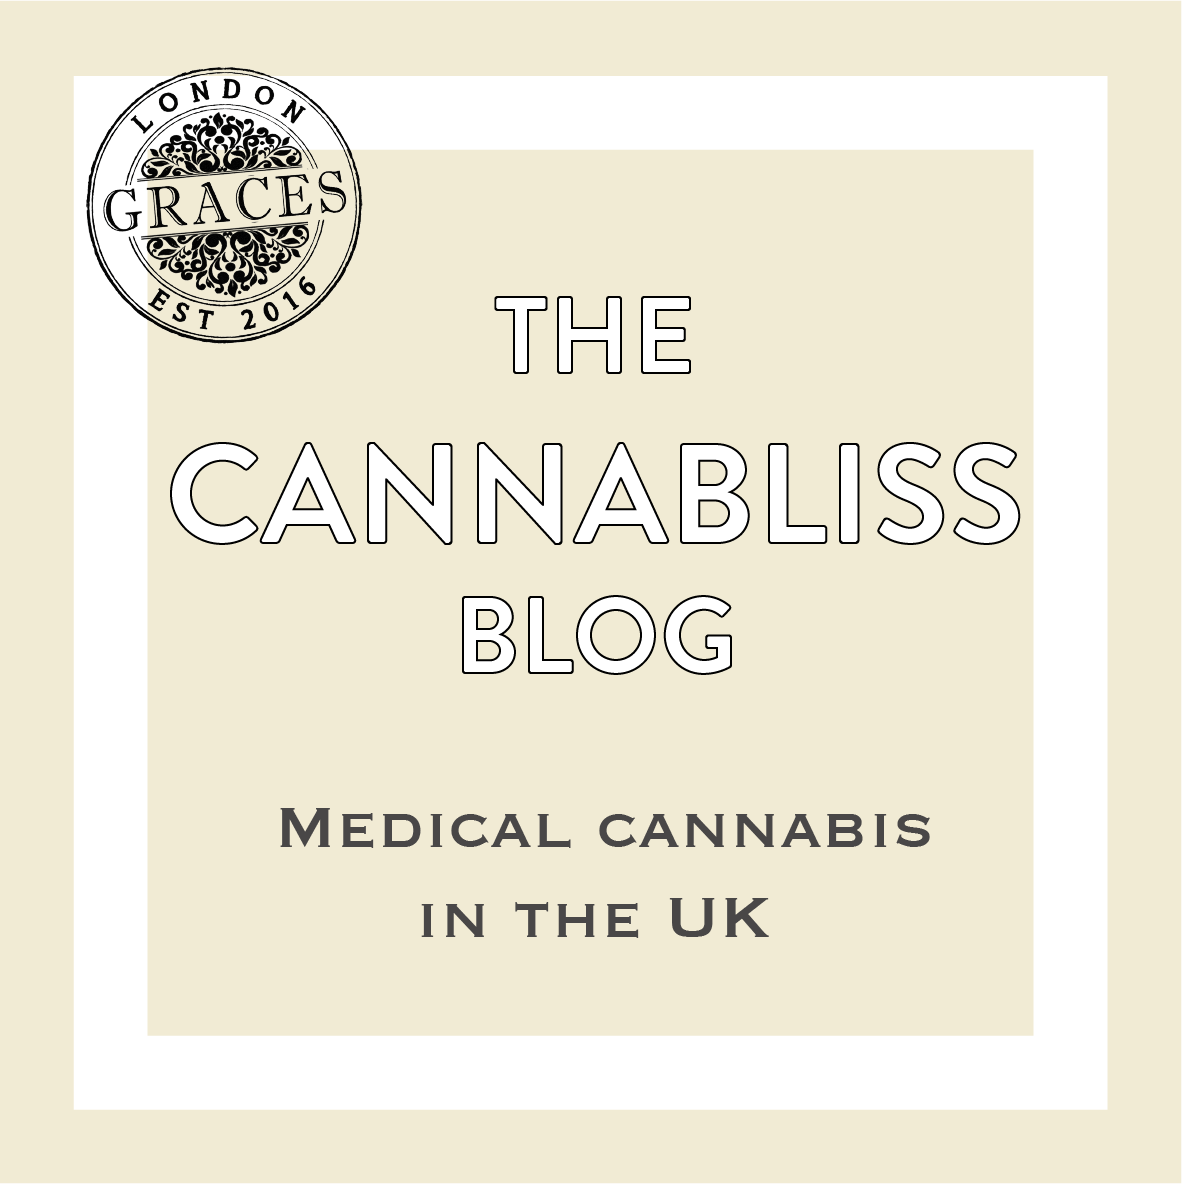 Cannabliss - Medical cannabis in the UK